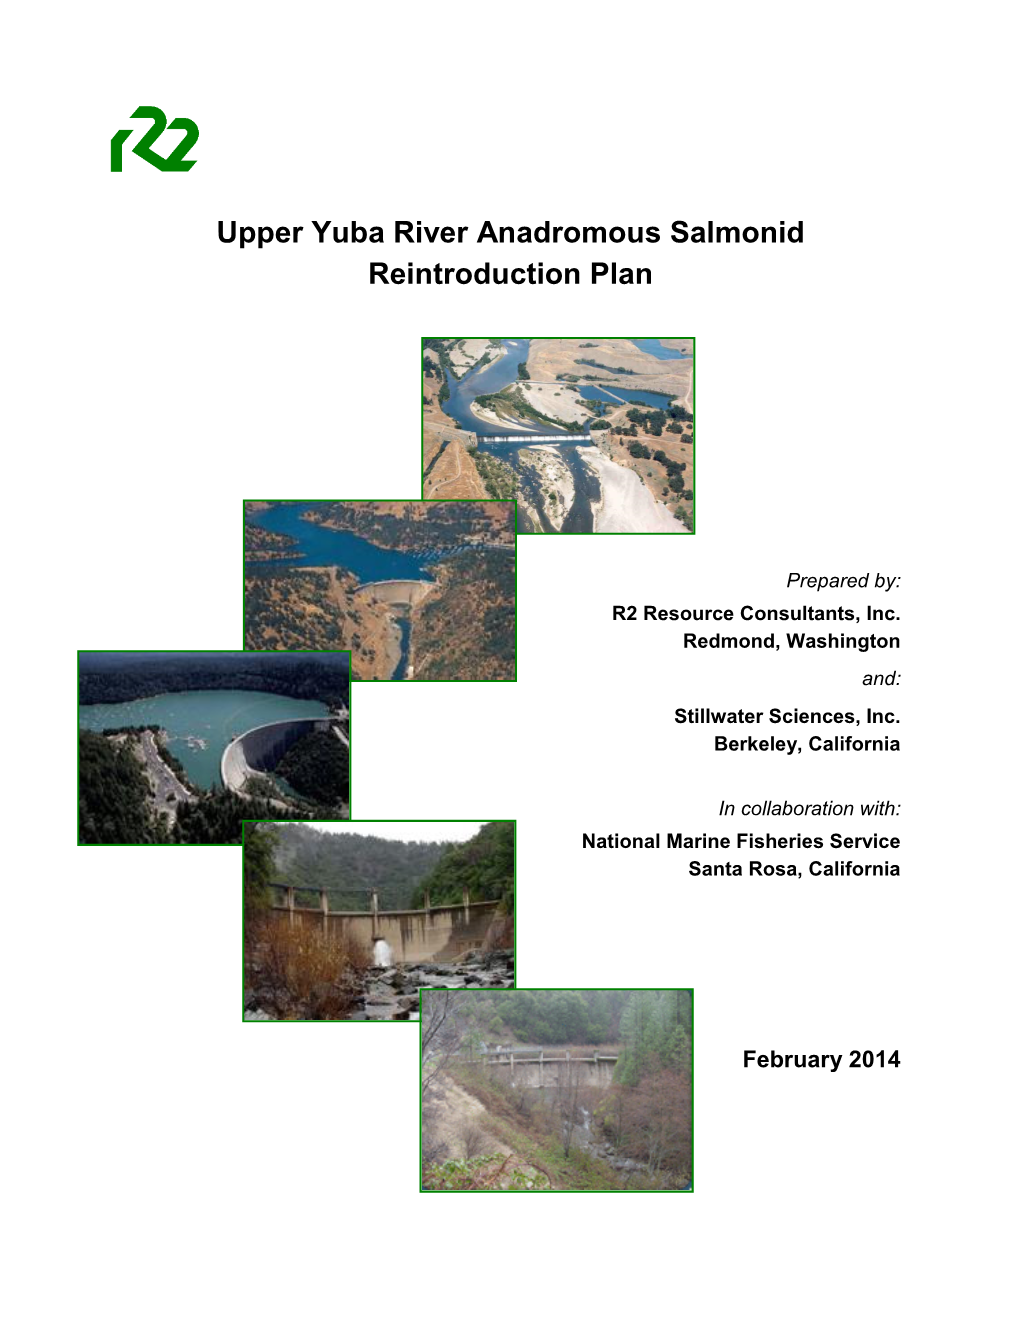 Upper Yuba River Anadromous Salmonid Reintroduction Plan